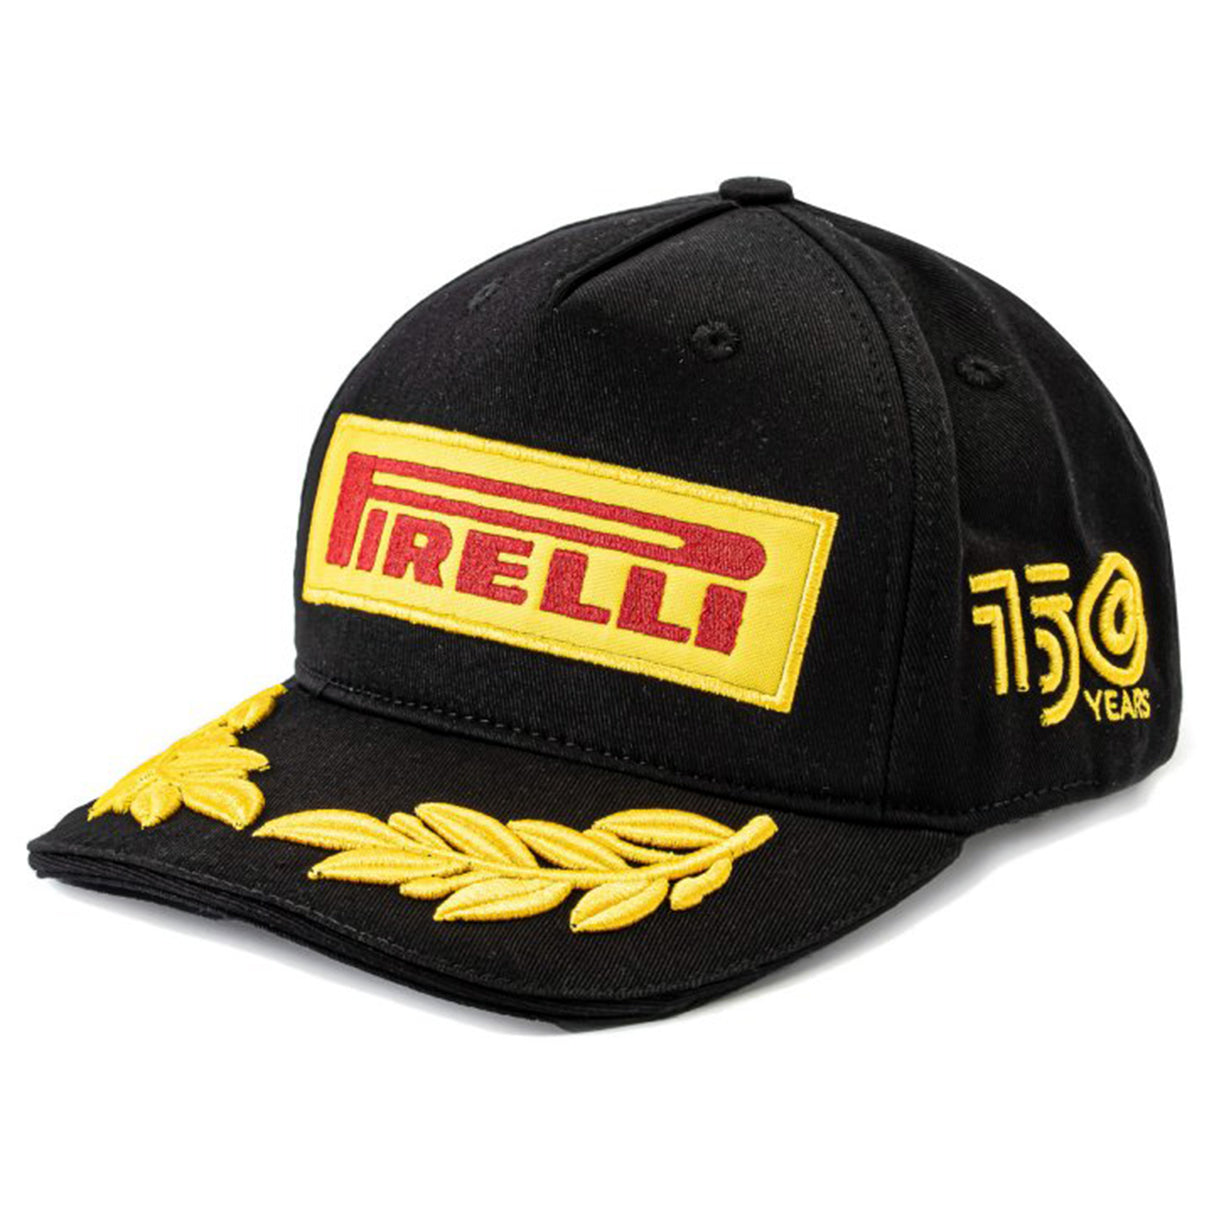 Pirelli P Zero Race 150th Year Limited Edition Box Kit